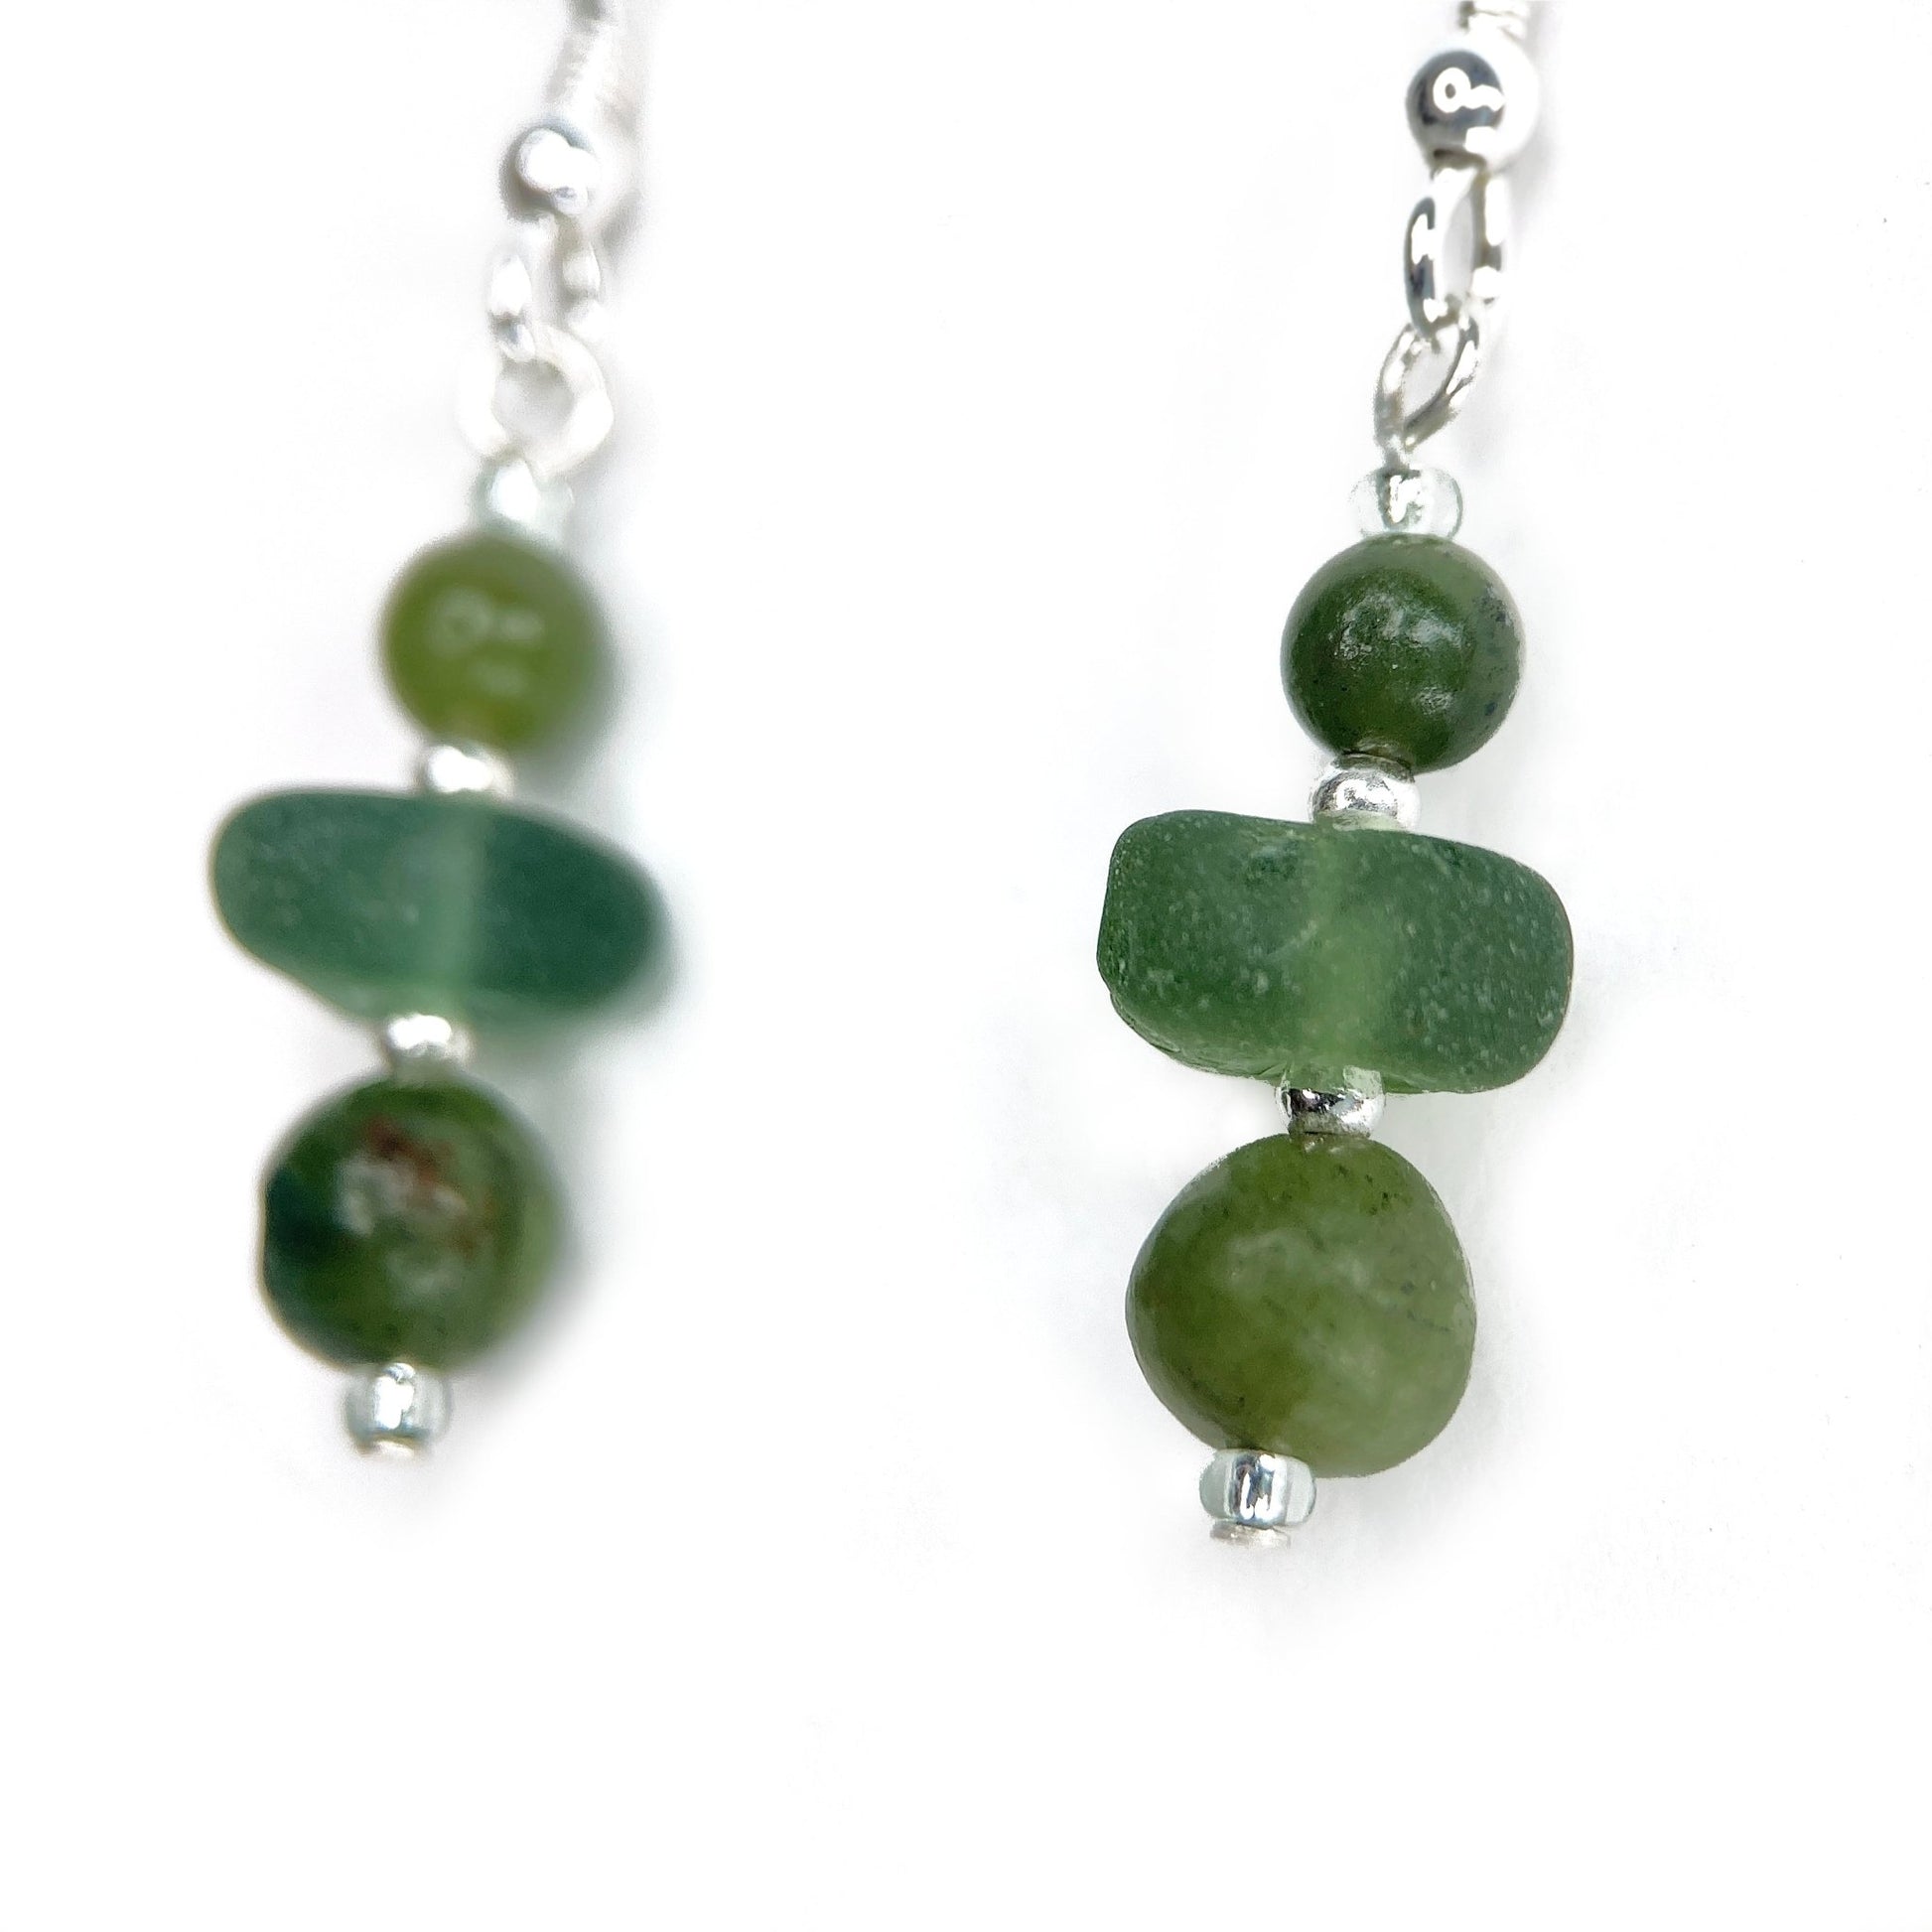 Green Sea Glass Earrings - Sterling Silver Beaded Earrings with Jade Crystal - East Neuk Beach Crafts